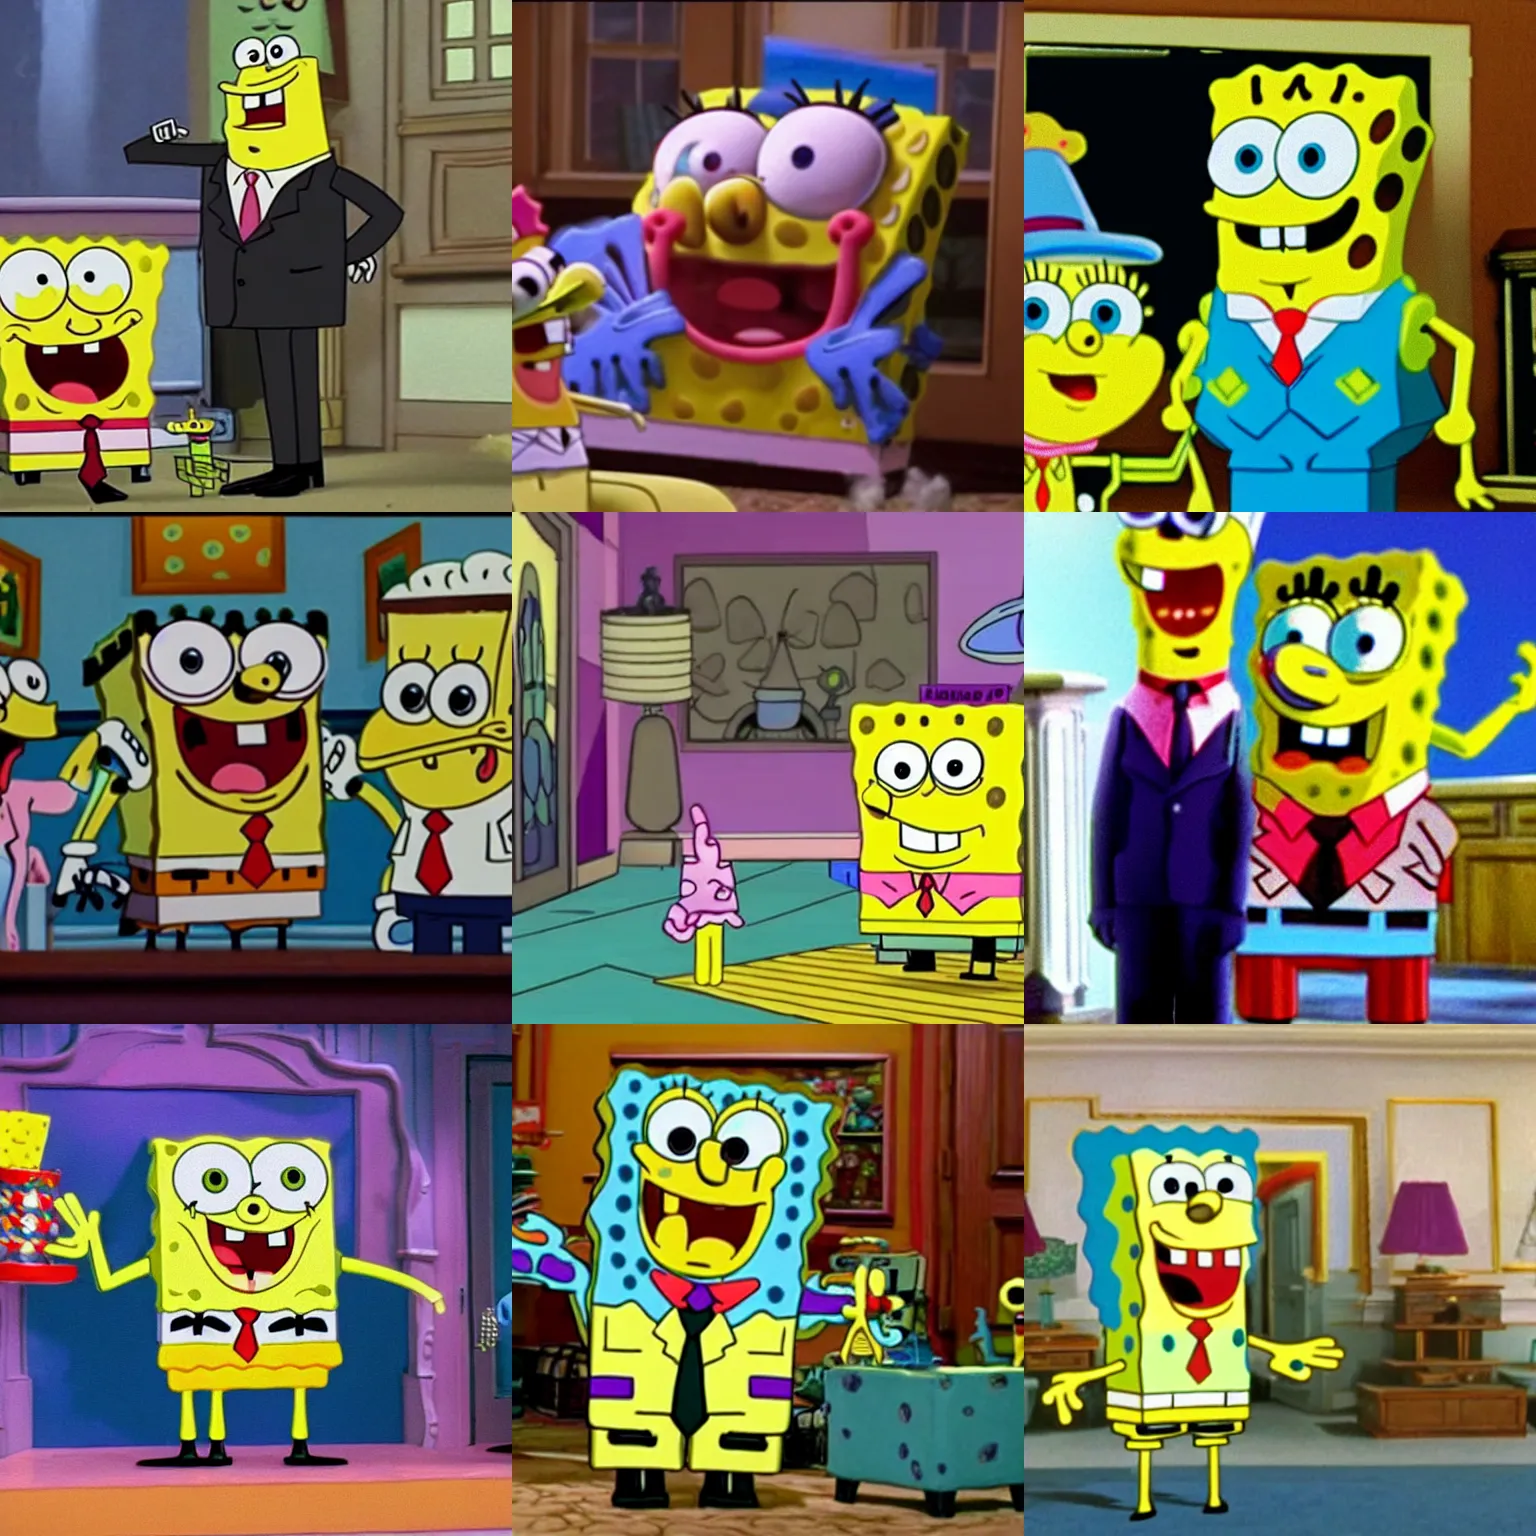 Prompt: spongebob squarepants is a robot butler, movie still